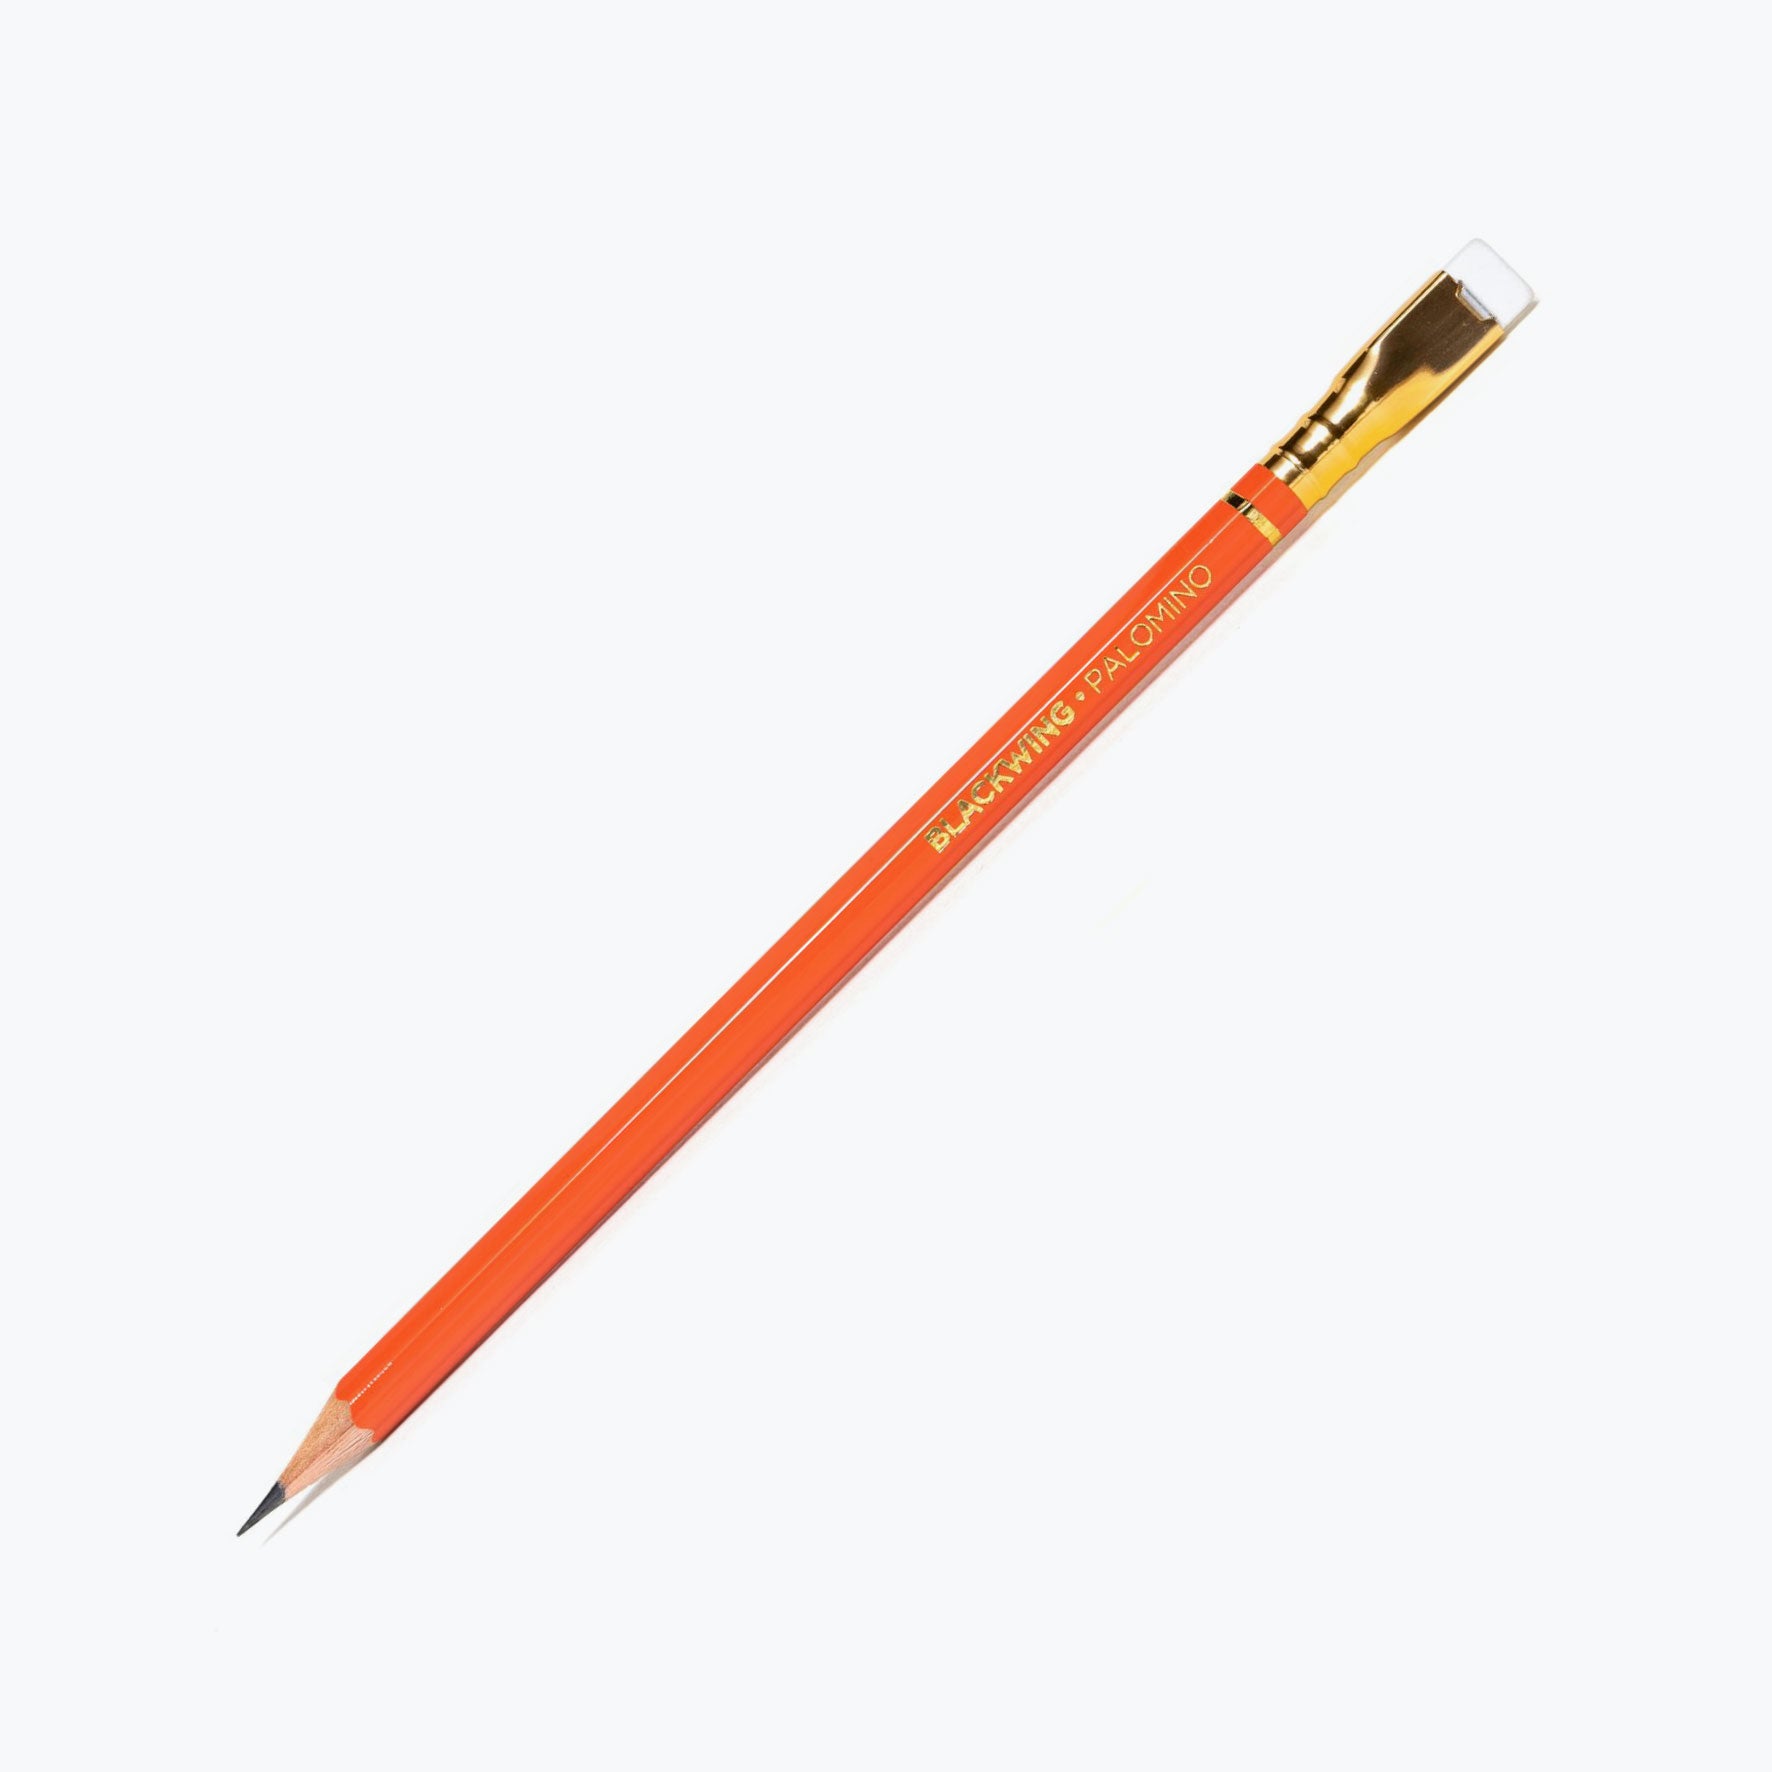 Palomino Blackwing - Pencil - Blackwing Eras 2 - Orange - Box of 12 (Limited Edition)